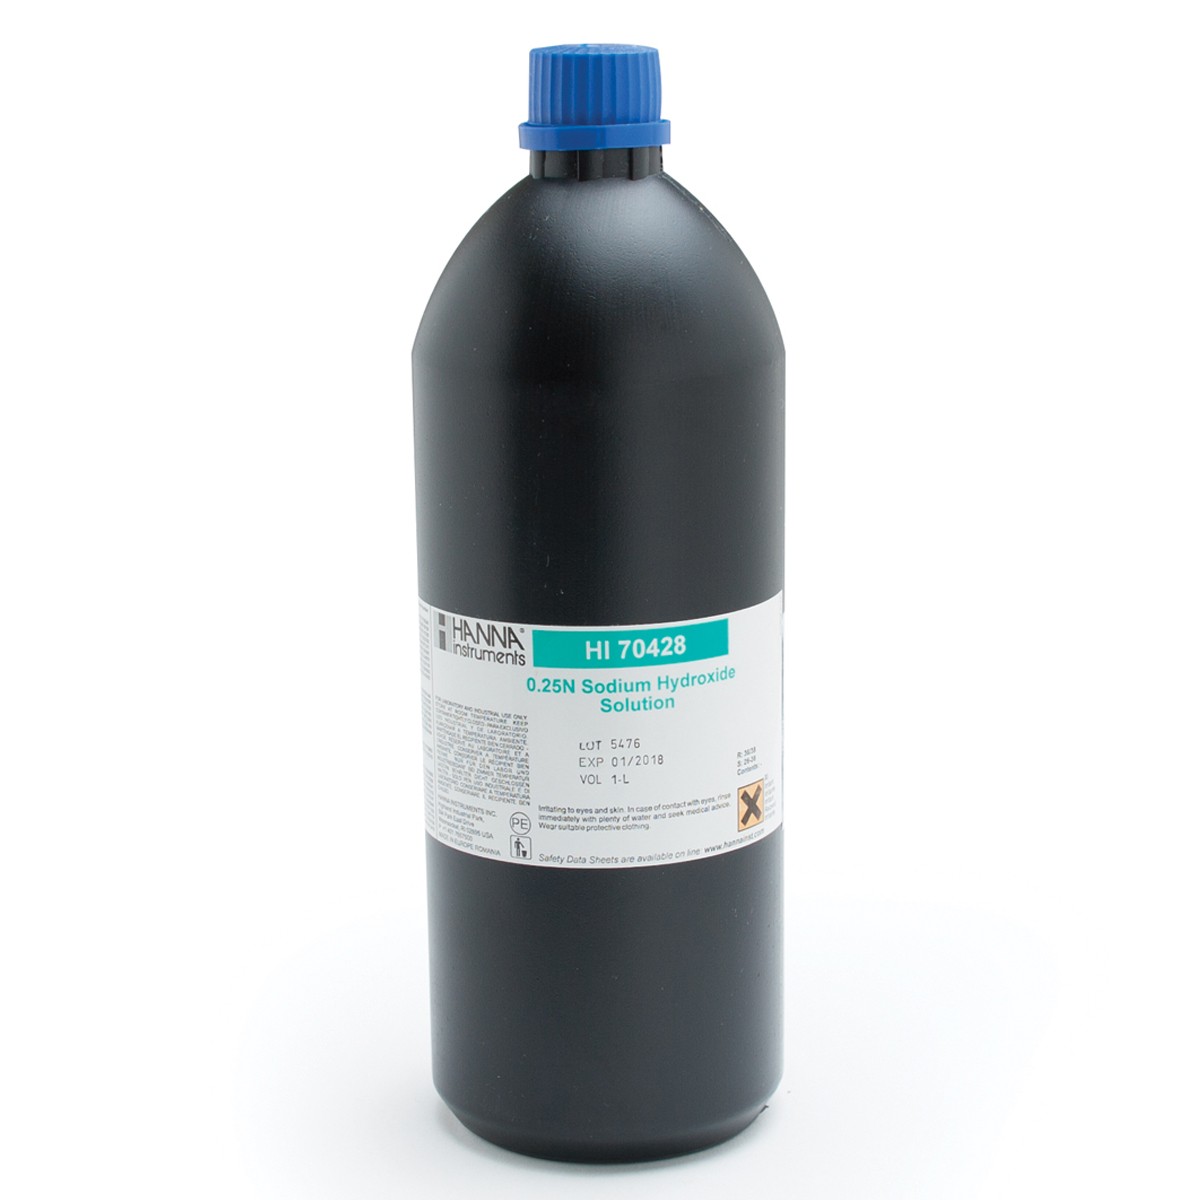 Sodium Hydroxide Solution 0.25N, 1L - HI70428